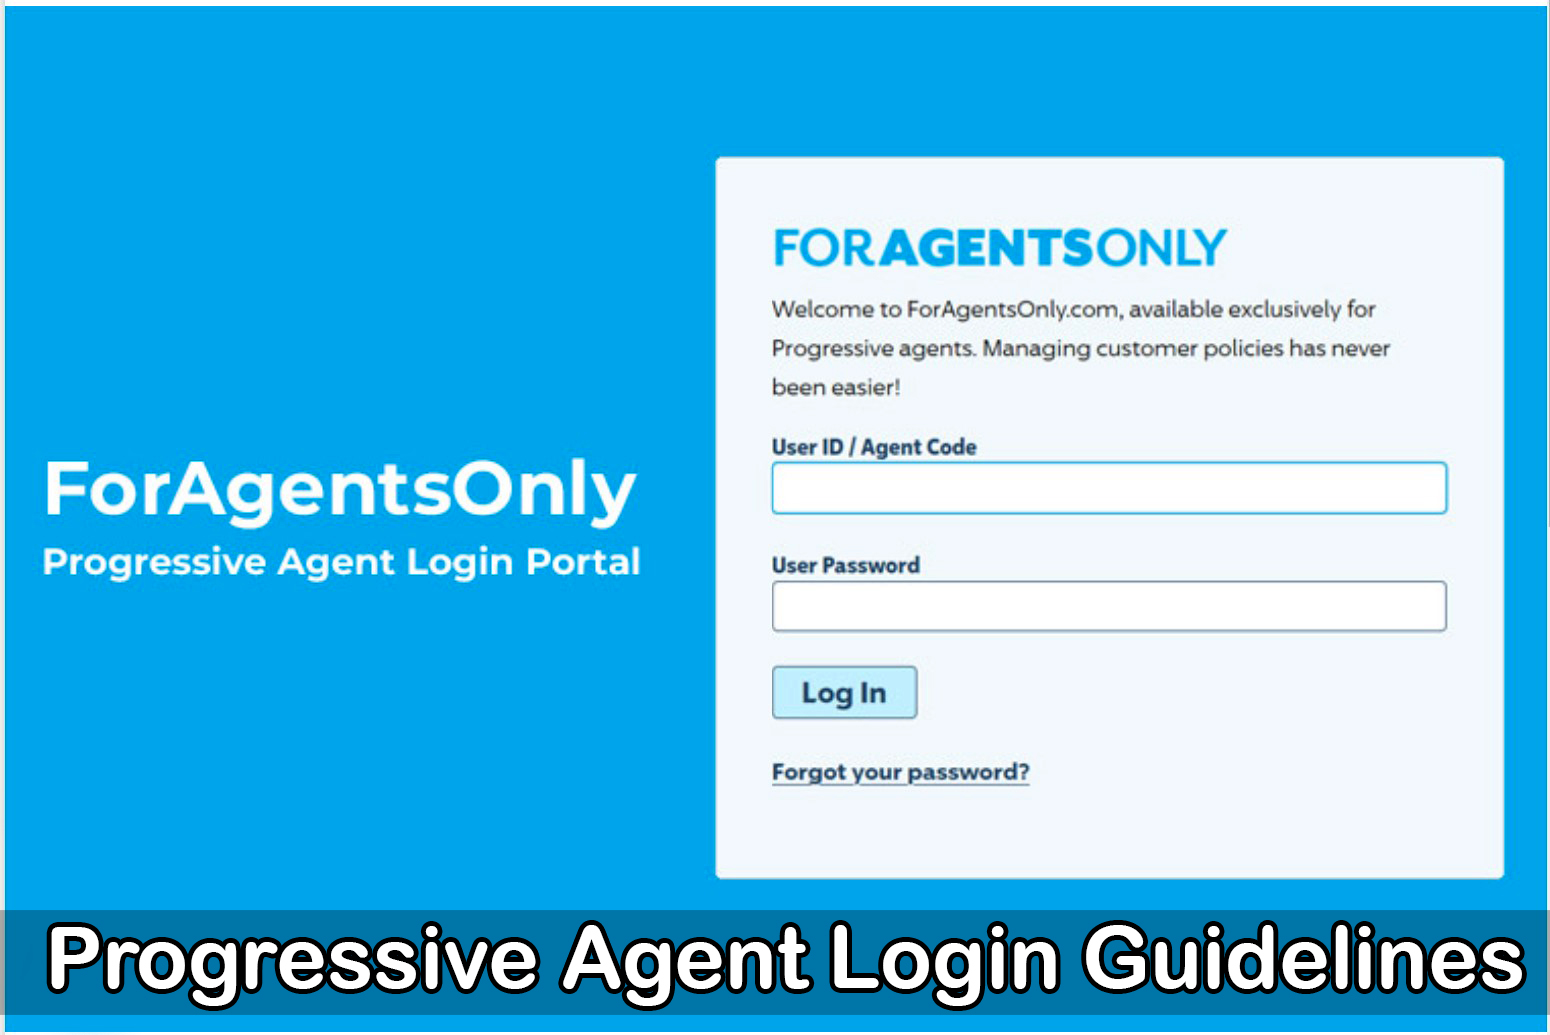 Progressive Agent Login Guidelines